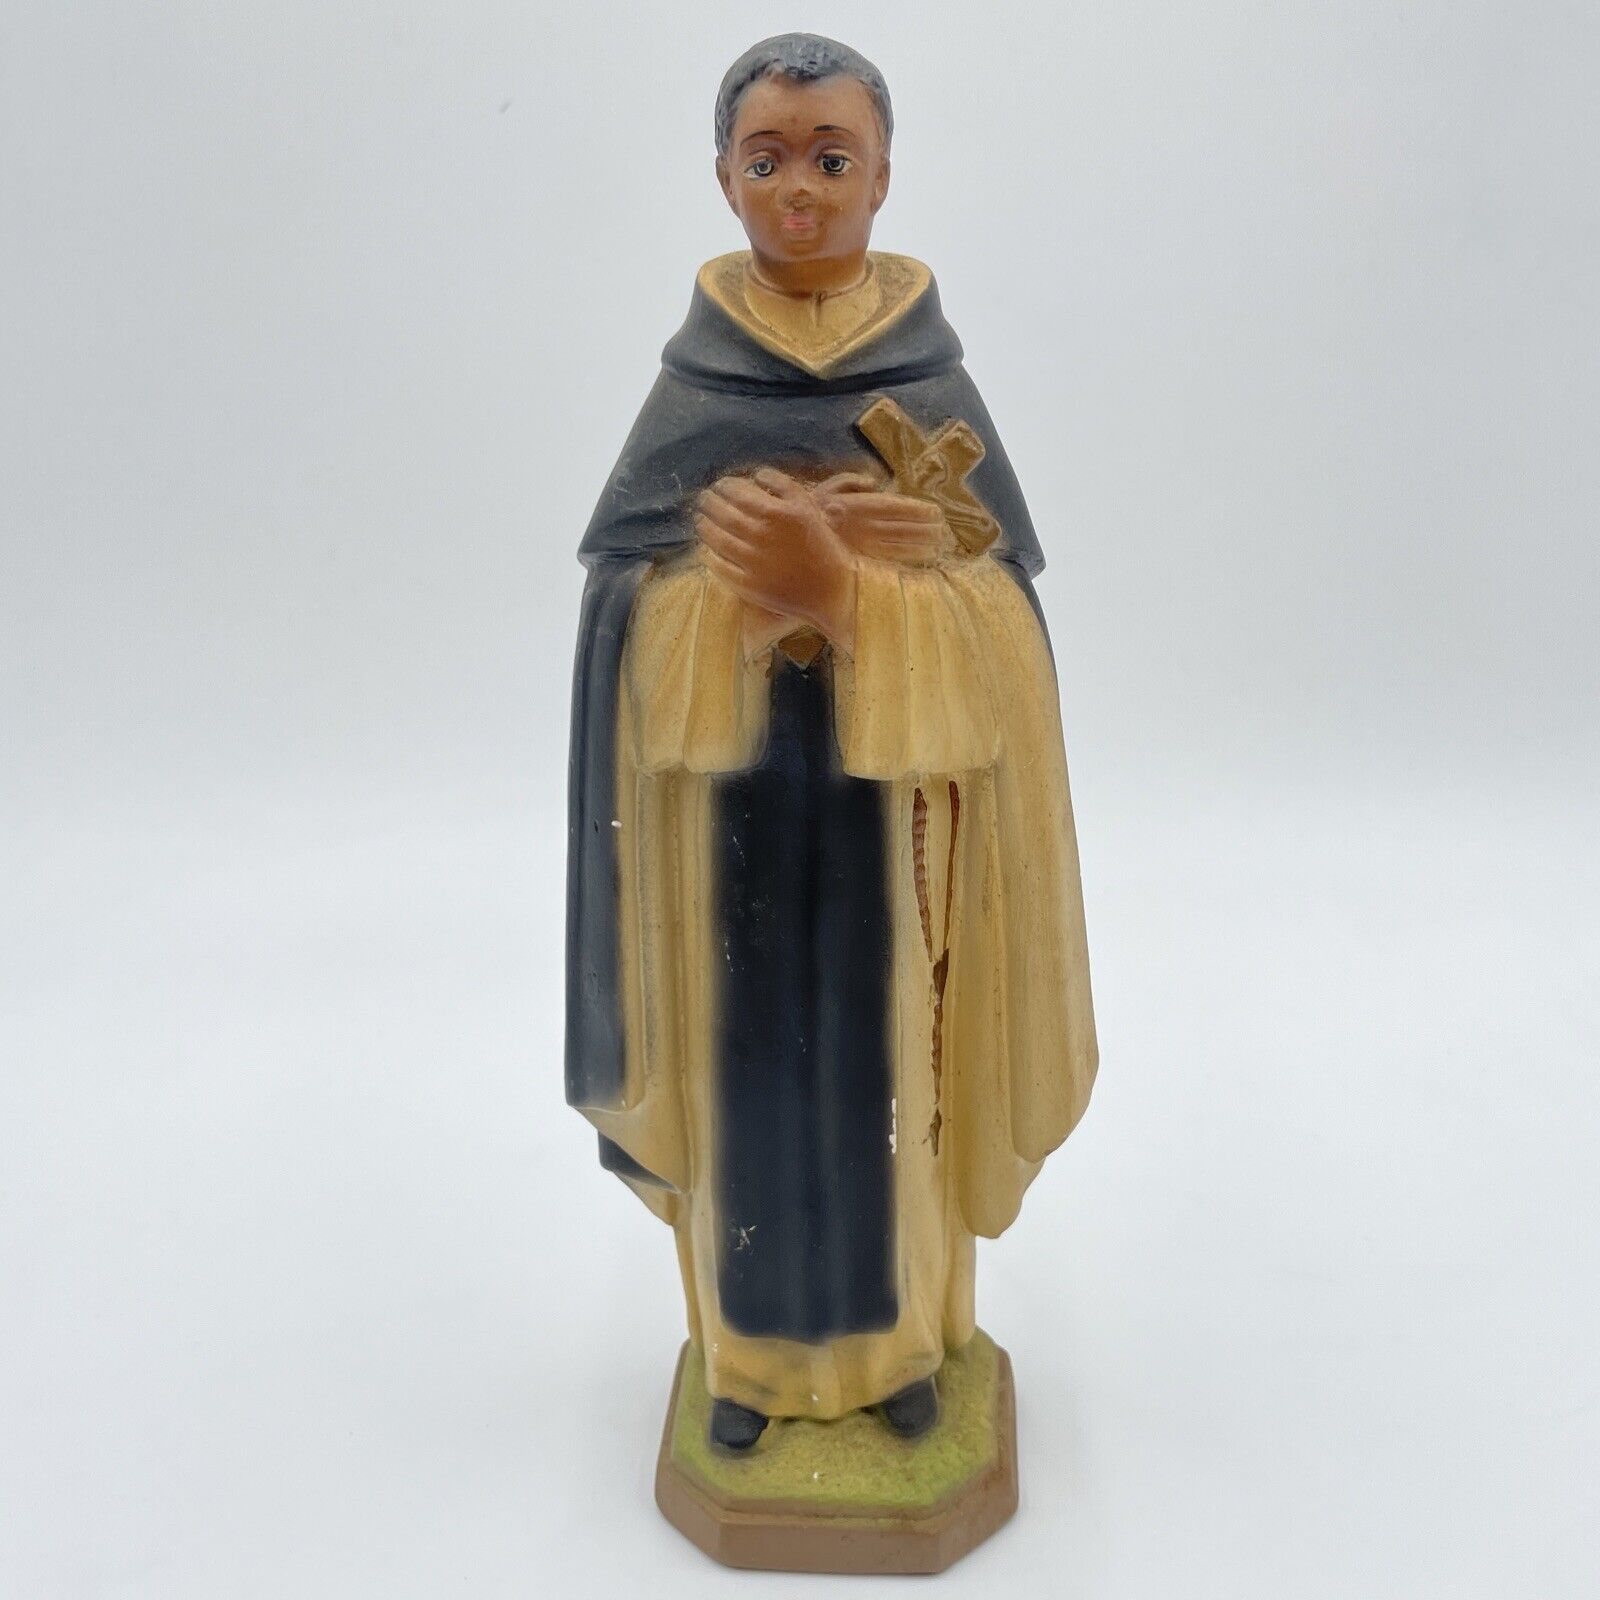 Vintage Religious Catholic Chalkware Black Priest Statue Sculpture C. S. 503 St